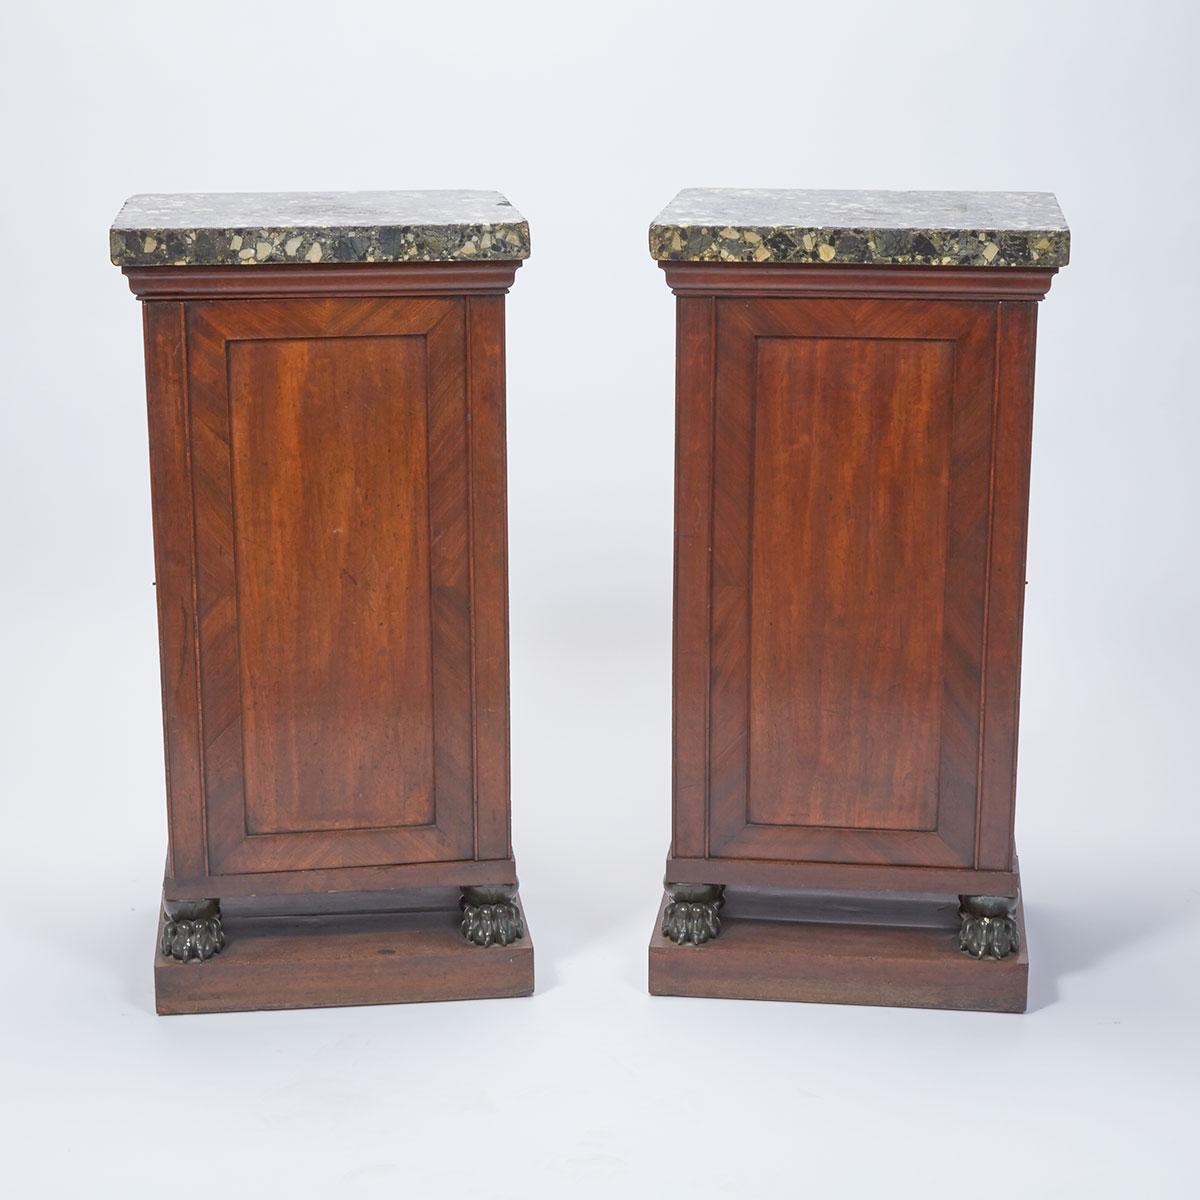 Pair of Regency Mahogany Dining Room Pedestals, early 19th century